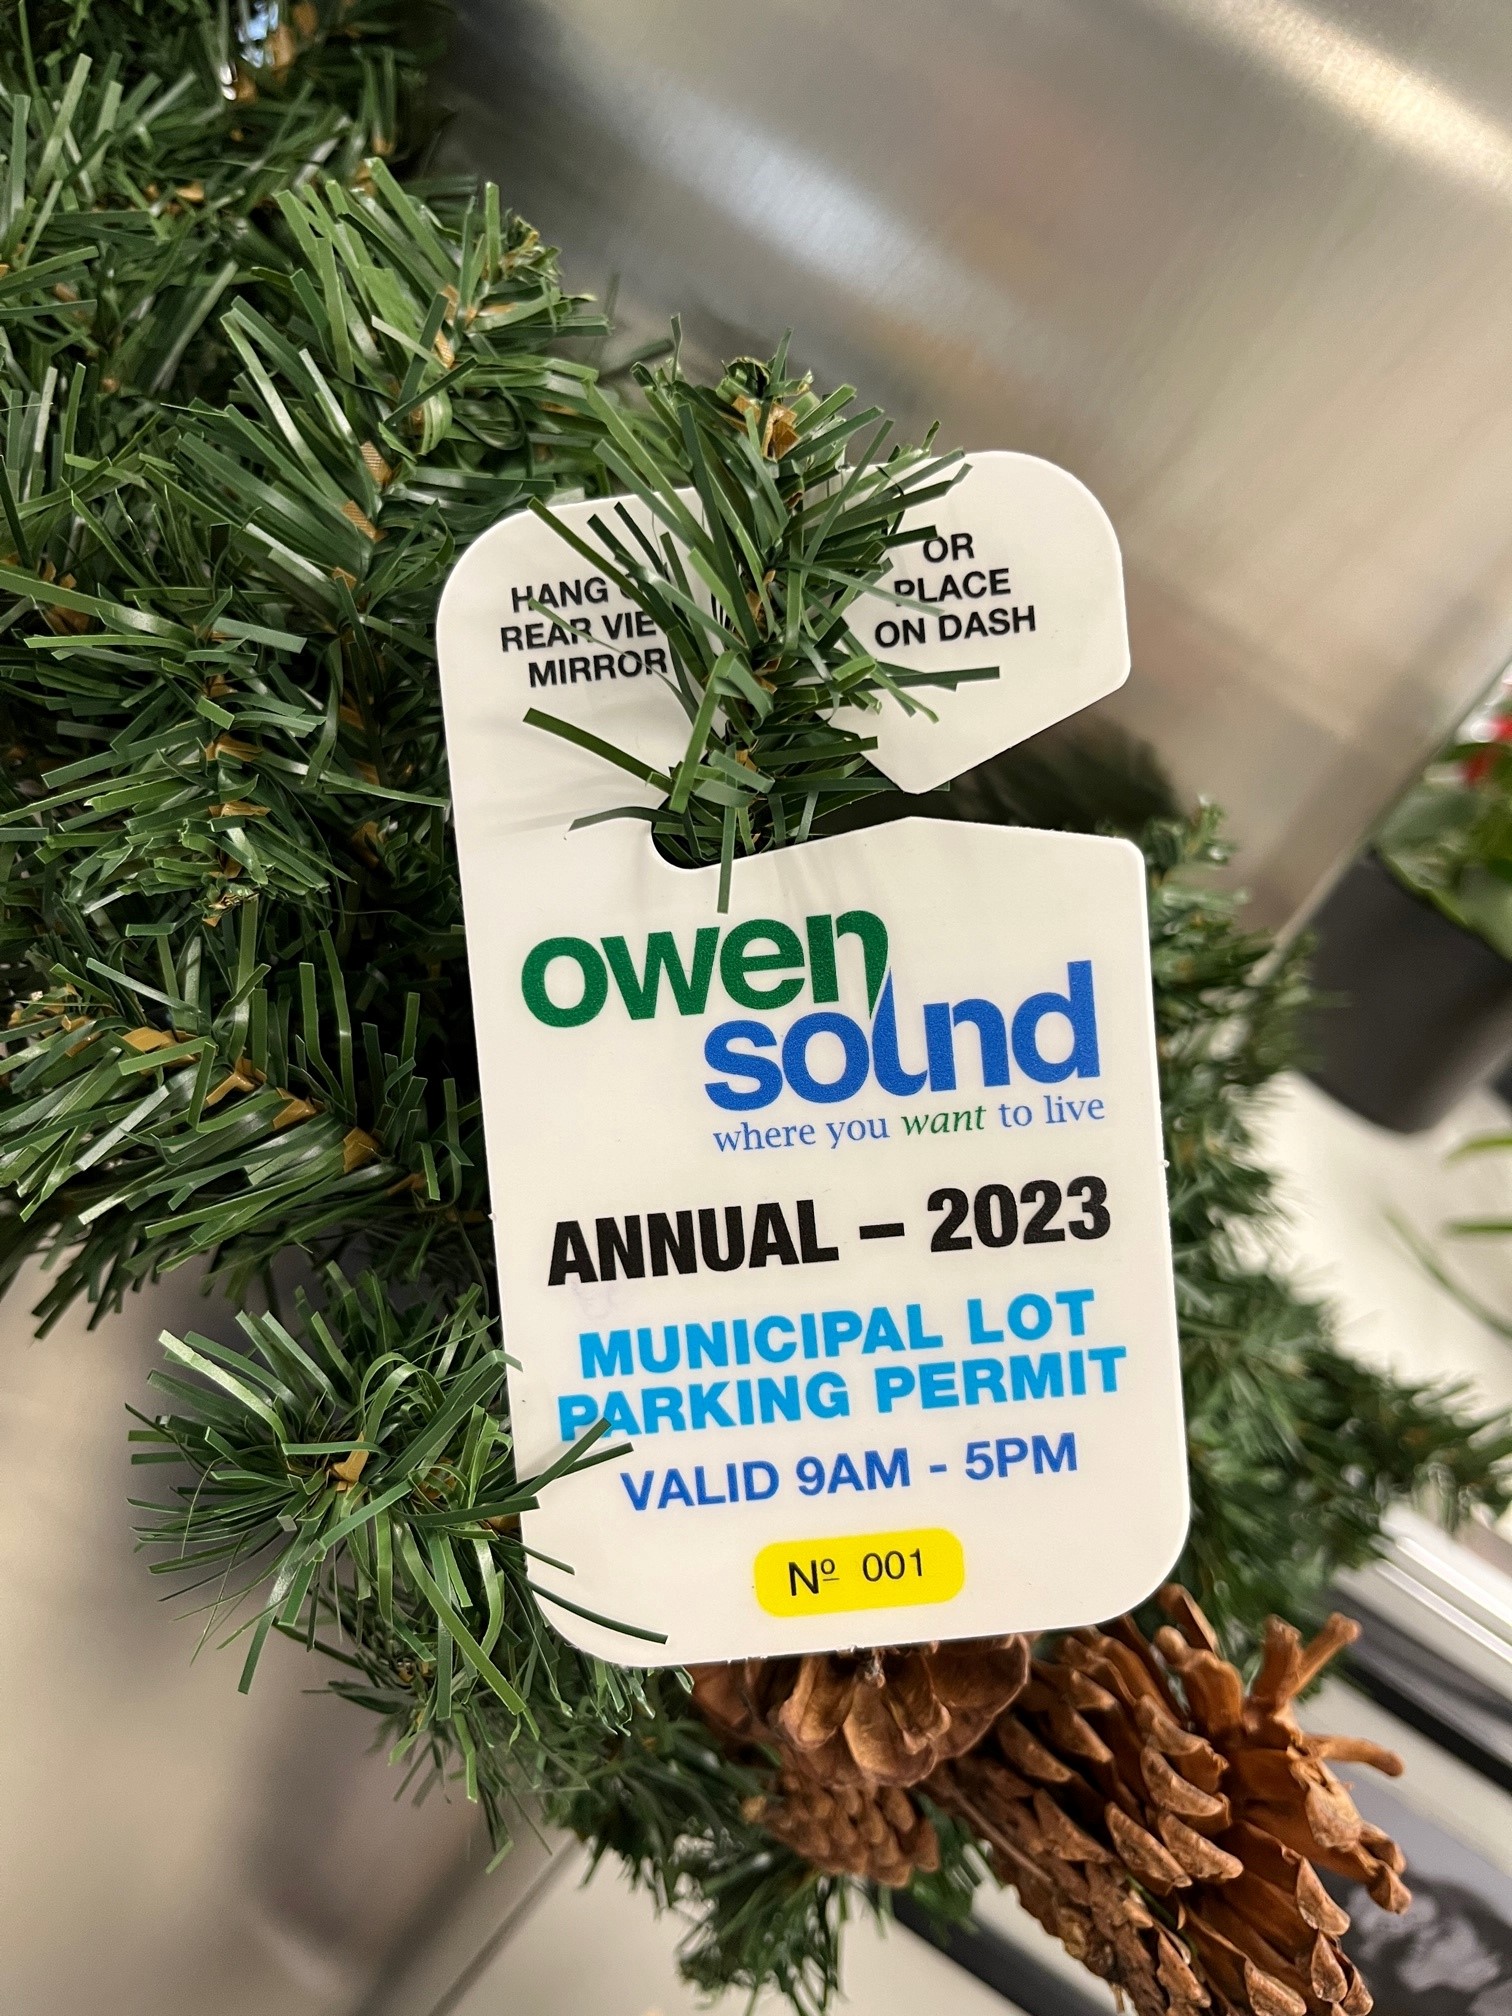 Owen Sound offers annual parking pass